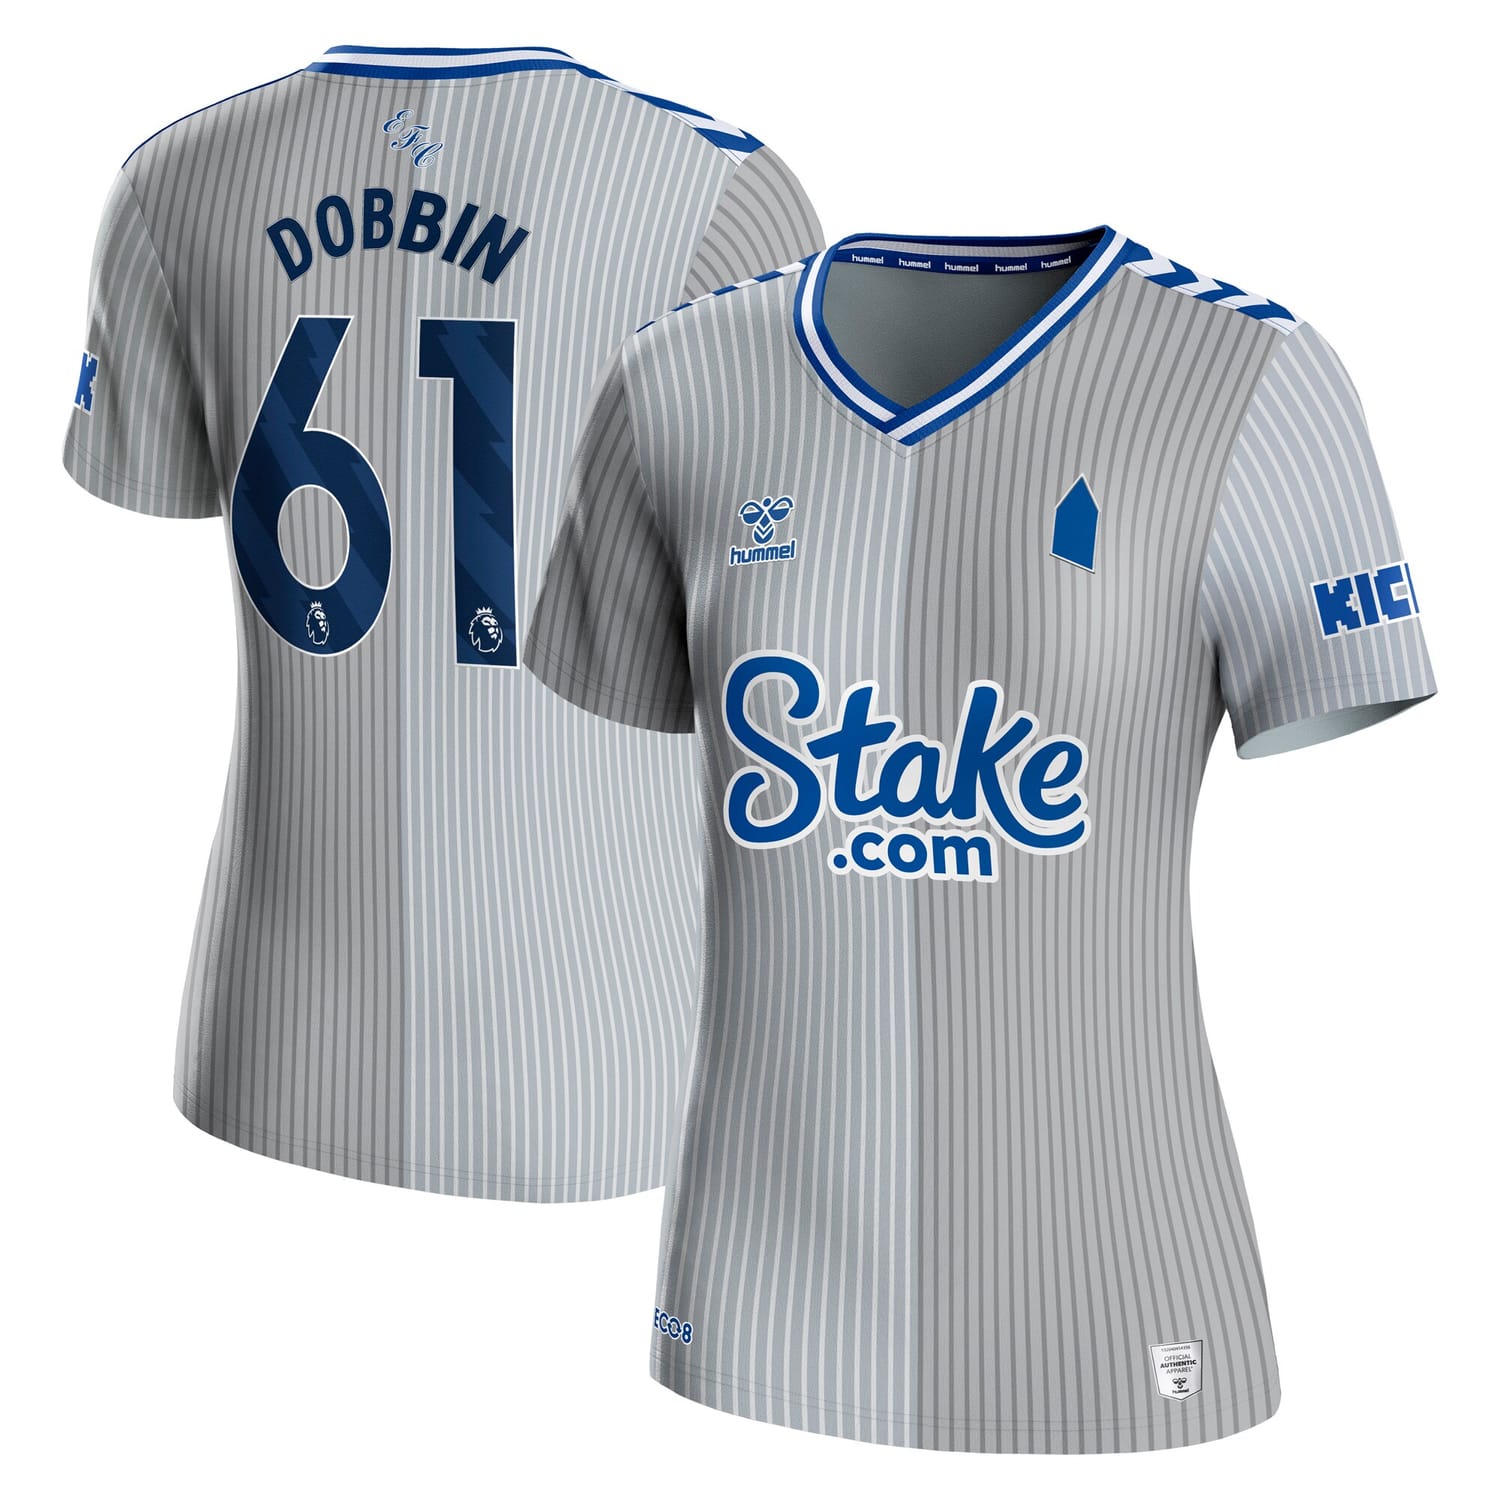 Premier League Everton Third Jersey Shirt 2023-24 player Lewis Dobbin 61 printing for Women